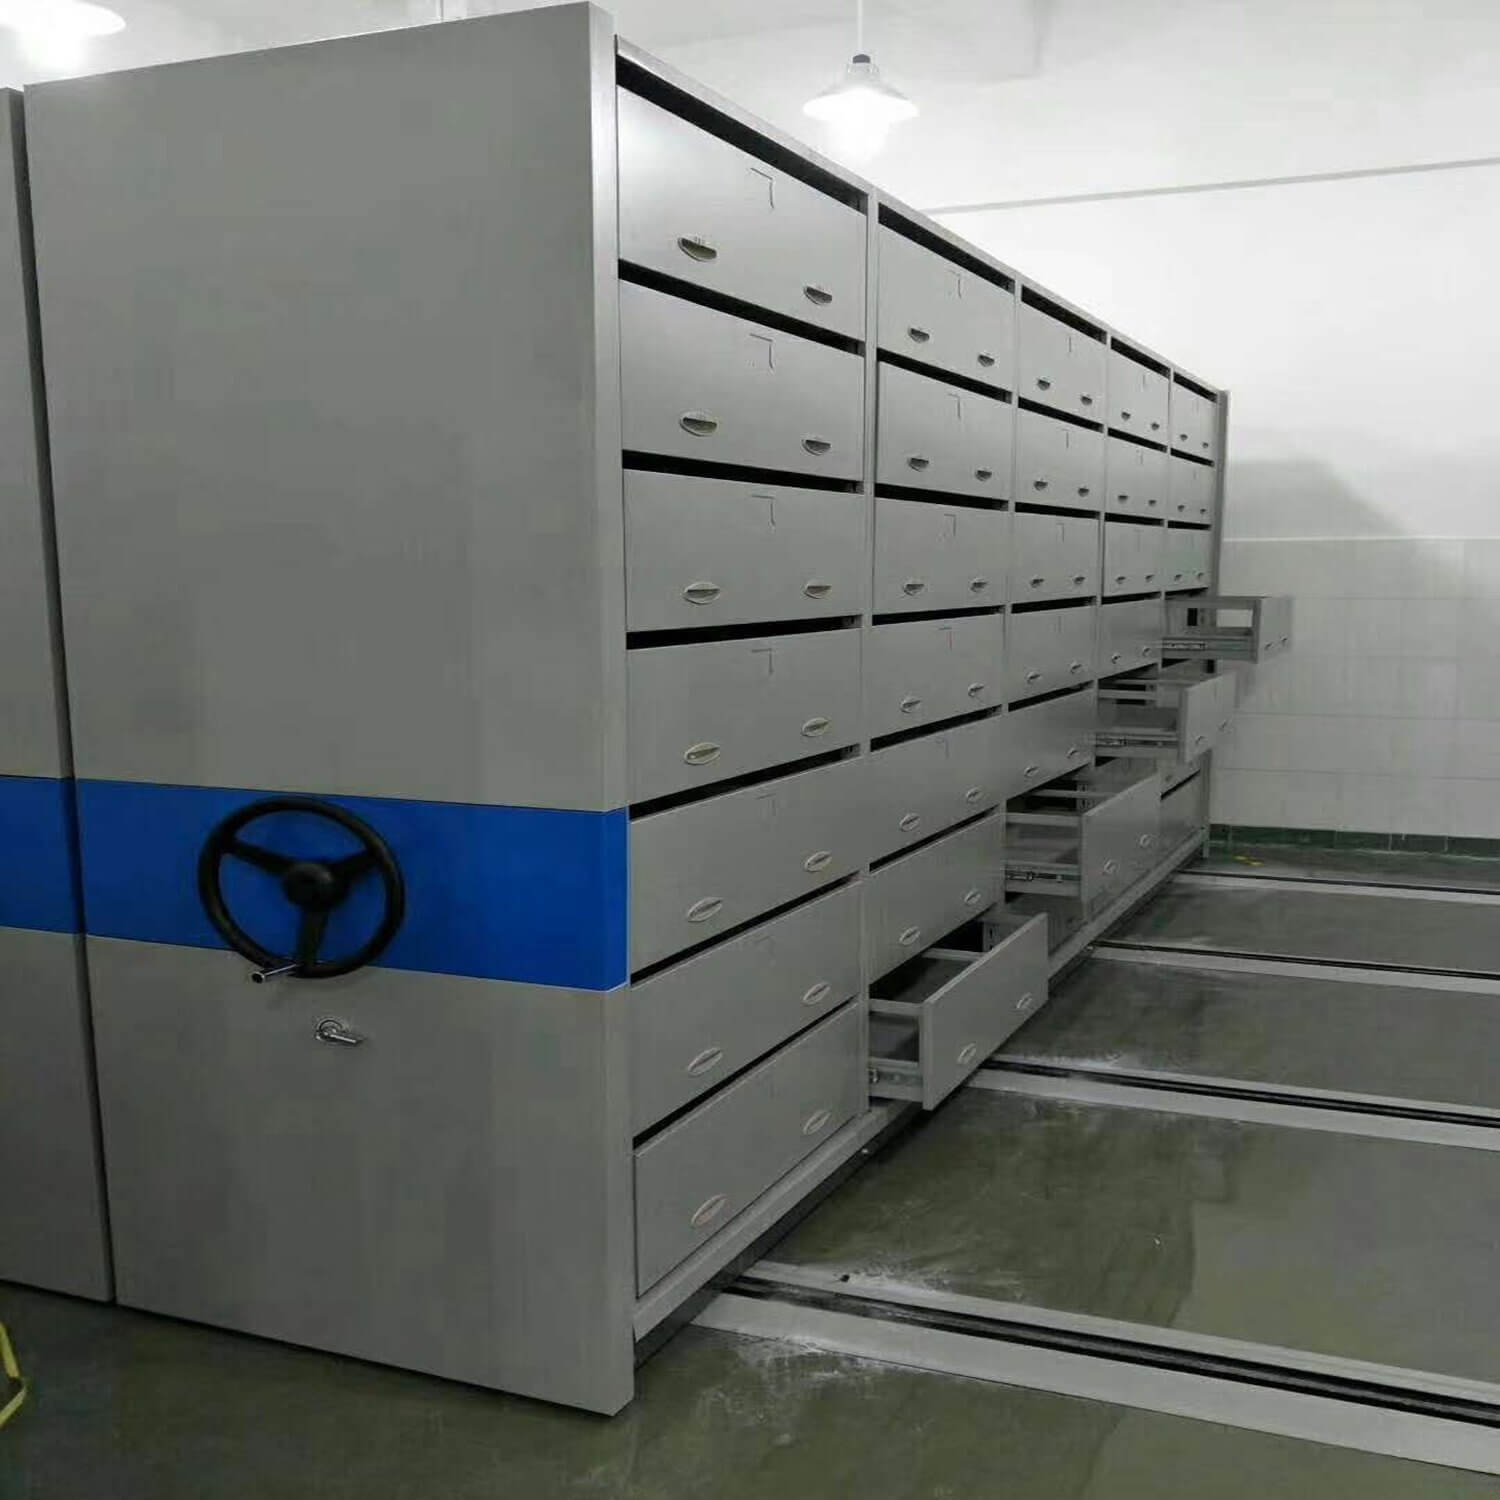 Mobile Compactor Storage System Manufacturers In Noida, Delhi